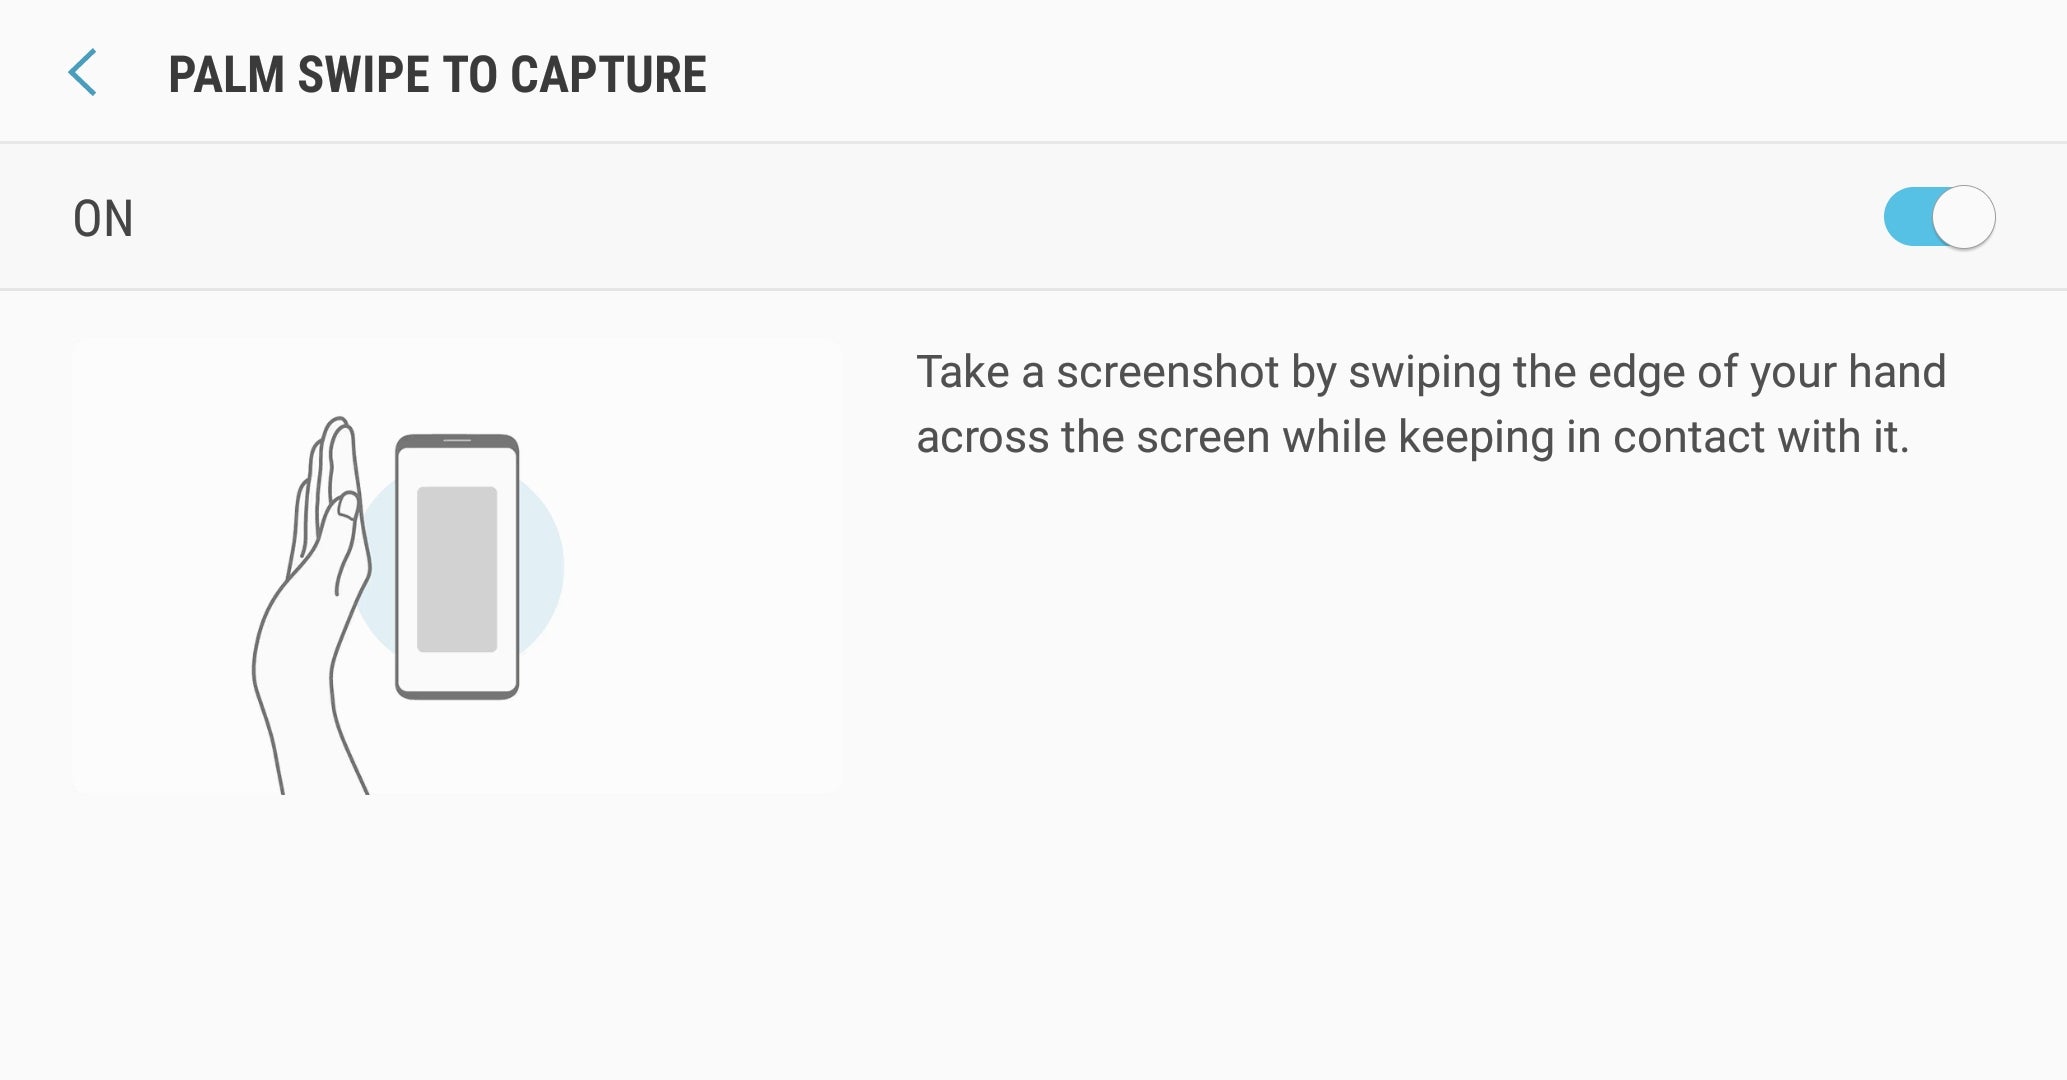 Swipe away! - How to take a screenshot on the Samsung Galaxy Note 8